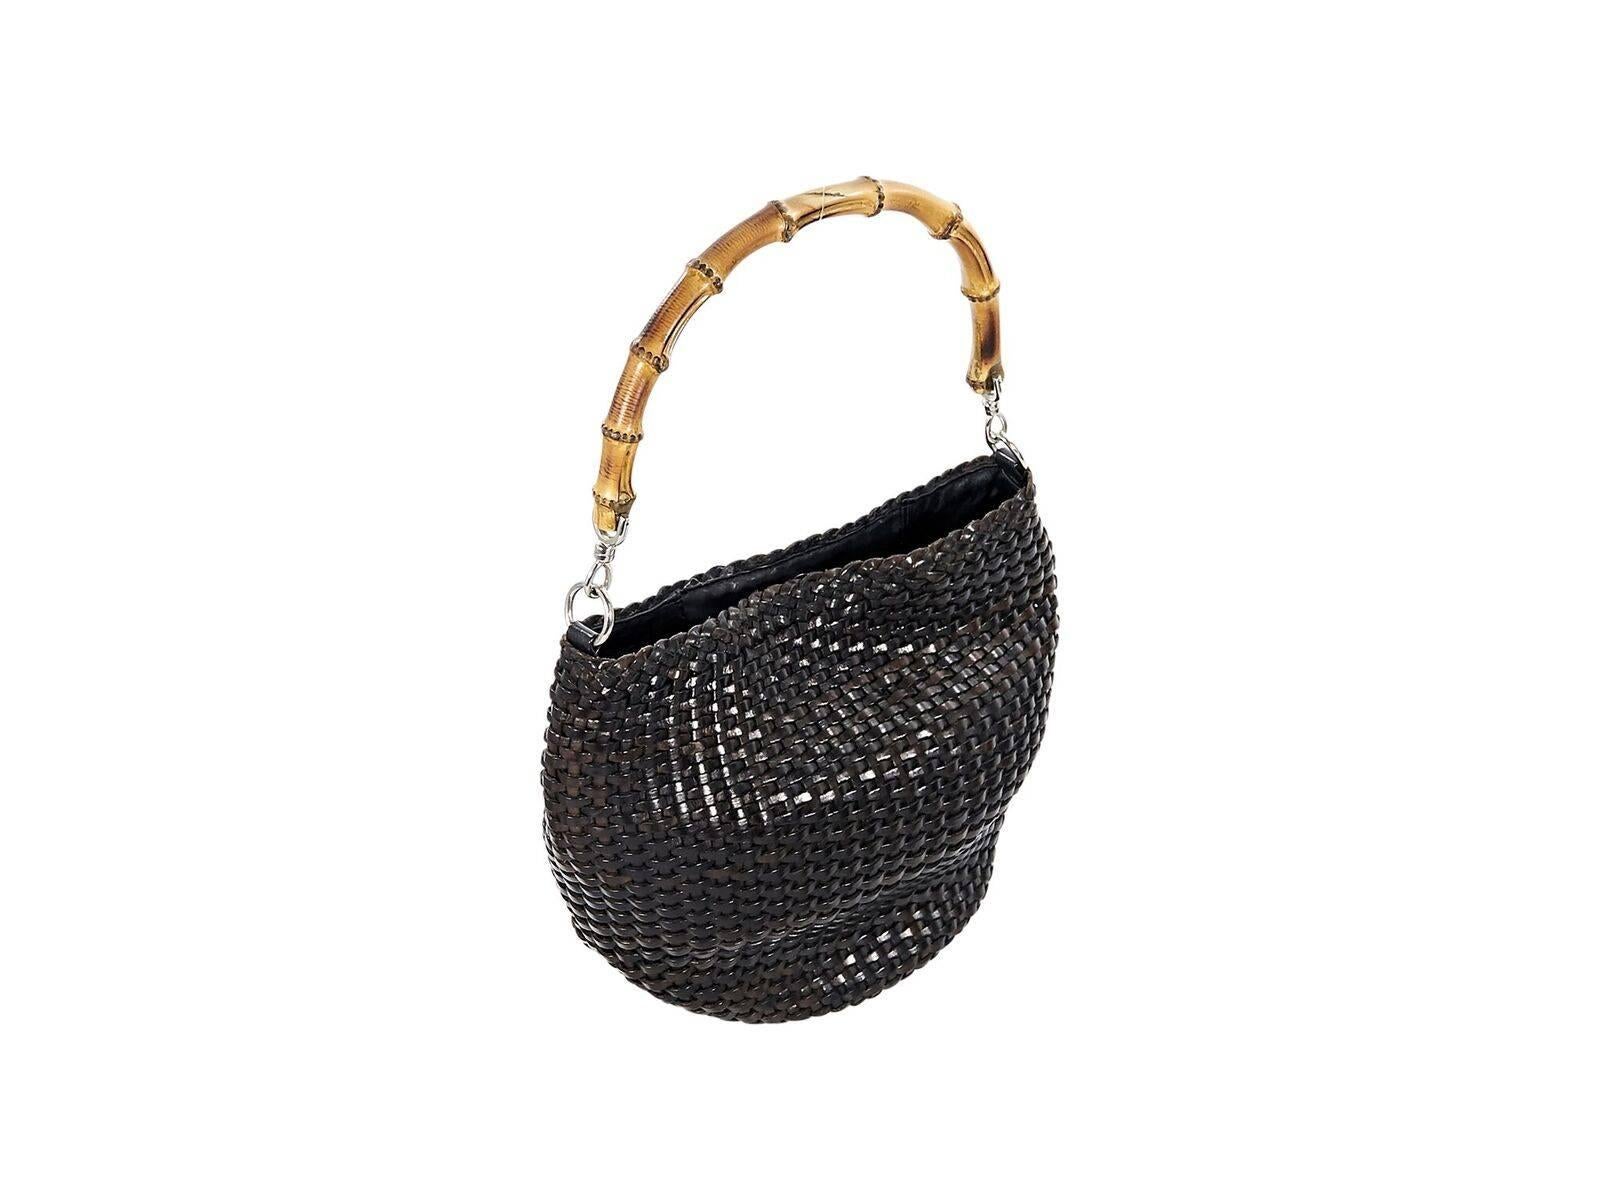 Product details:  Vintage black woven shoulder bag by Gucci.  Bamboo shoulder strap.  Magnetic snap closure.  Lined interior with inner zip pocket.  Silvertone hardware.  10.5